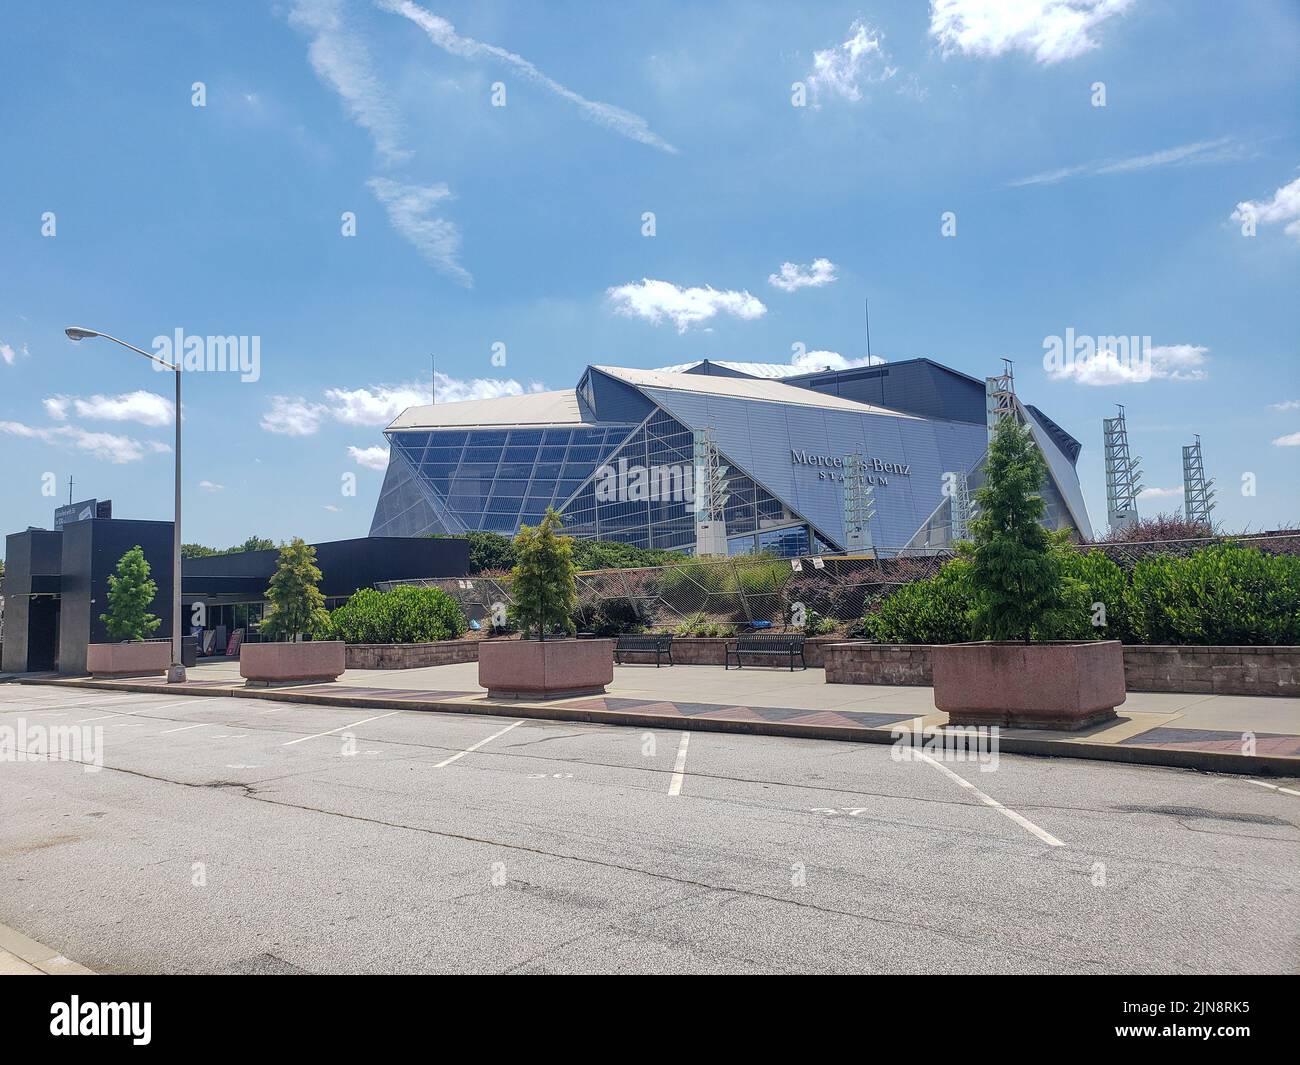 Mercedes benz stadium atlanta falcons hi-res stock photography and images -  Alamy